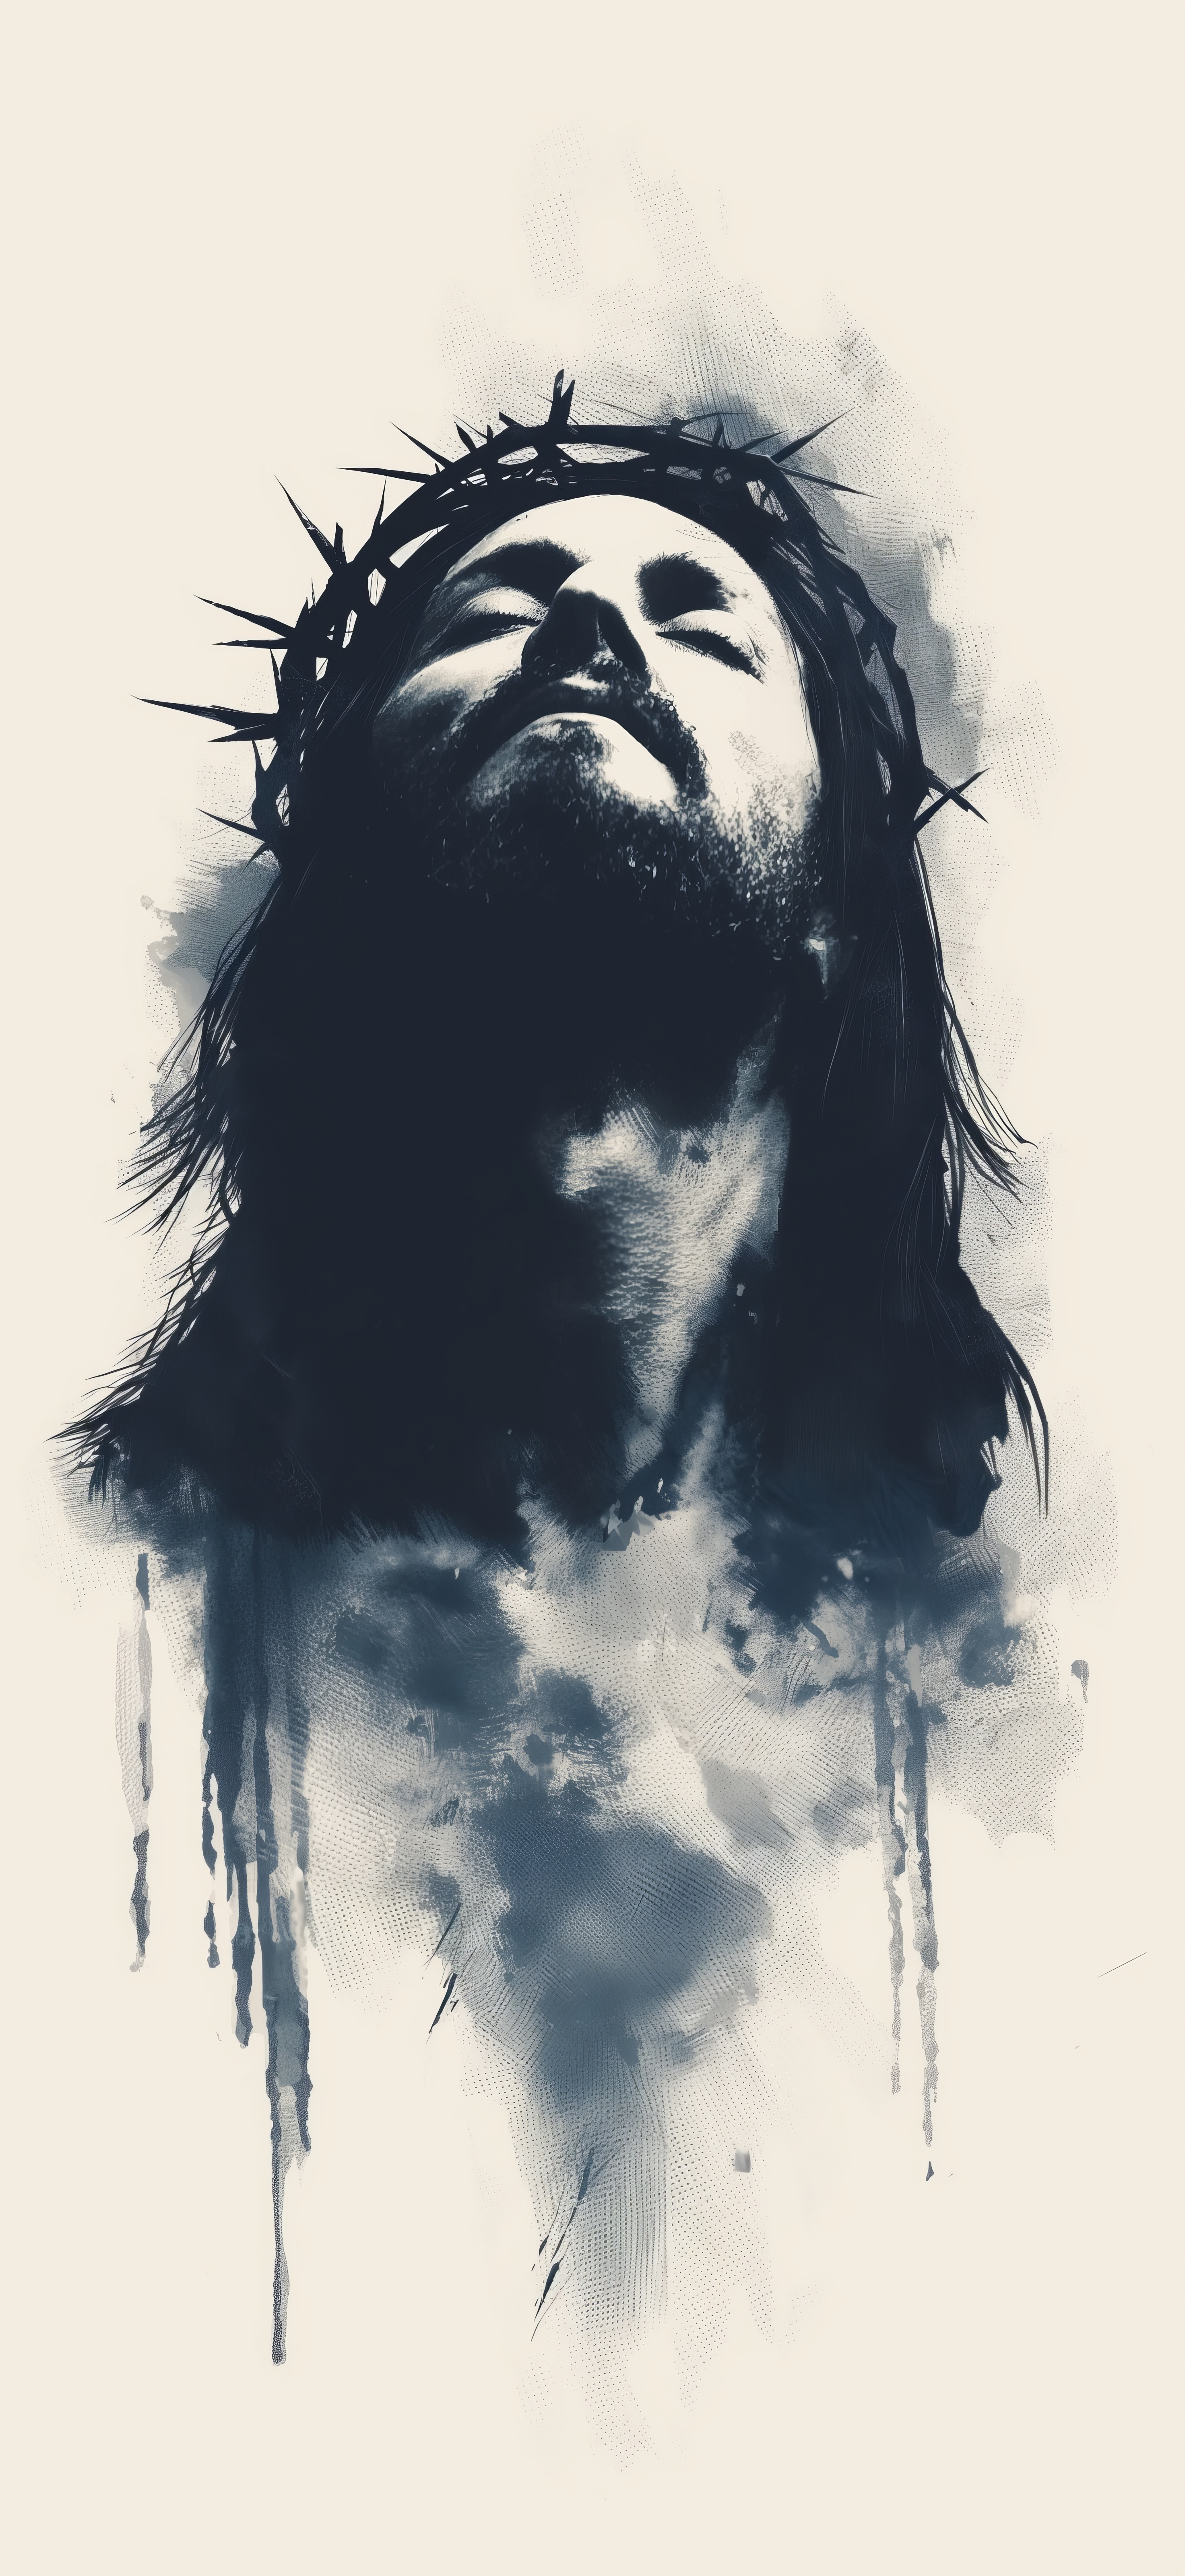 General 2944x6400 AI art illustration monochrome portrait display Jesus Christ crown of thorns